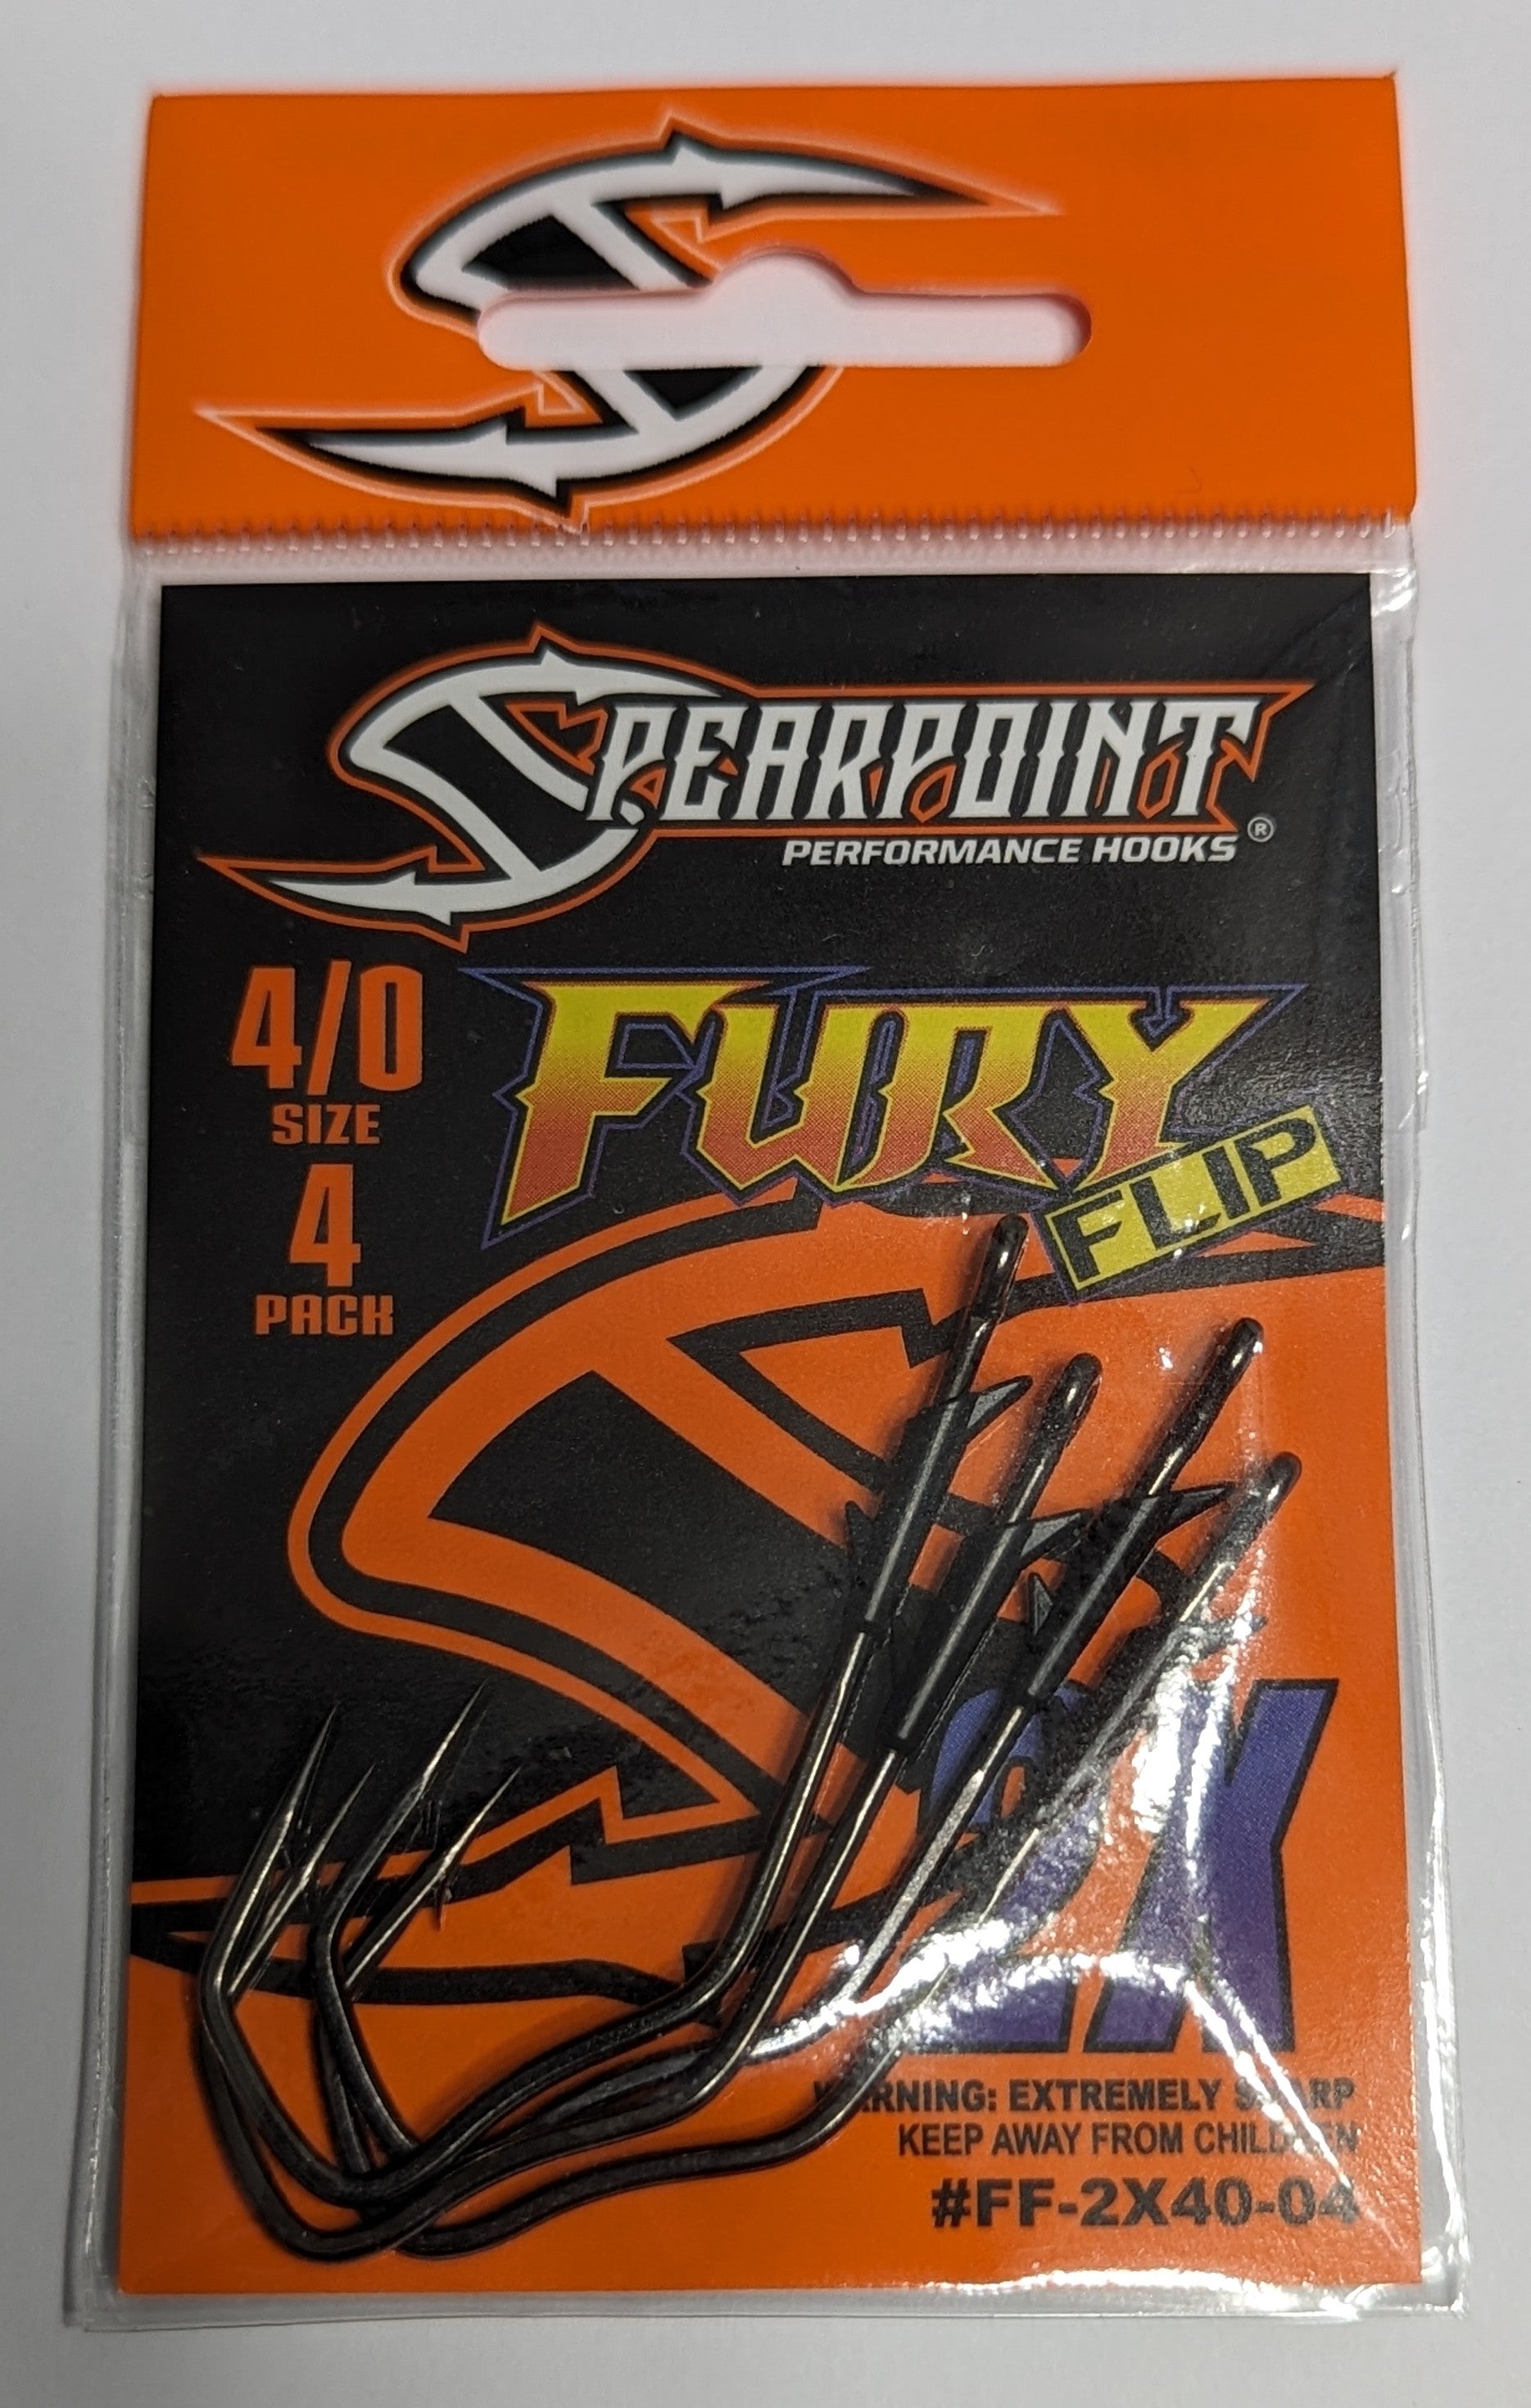 Spearpoint Performance Hooks - Fury Flip 4/0 4 pack – Big City